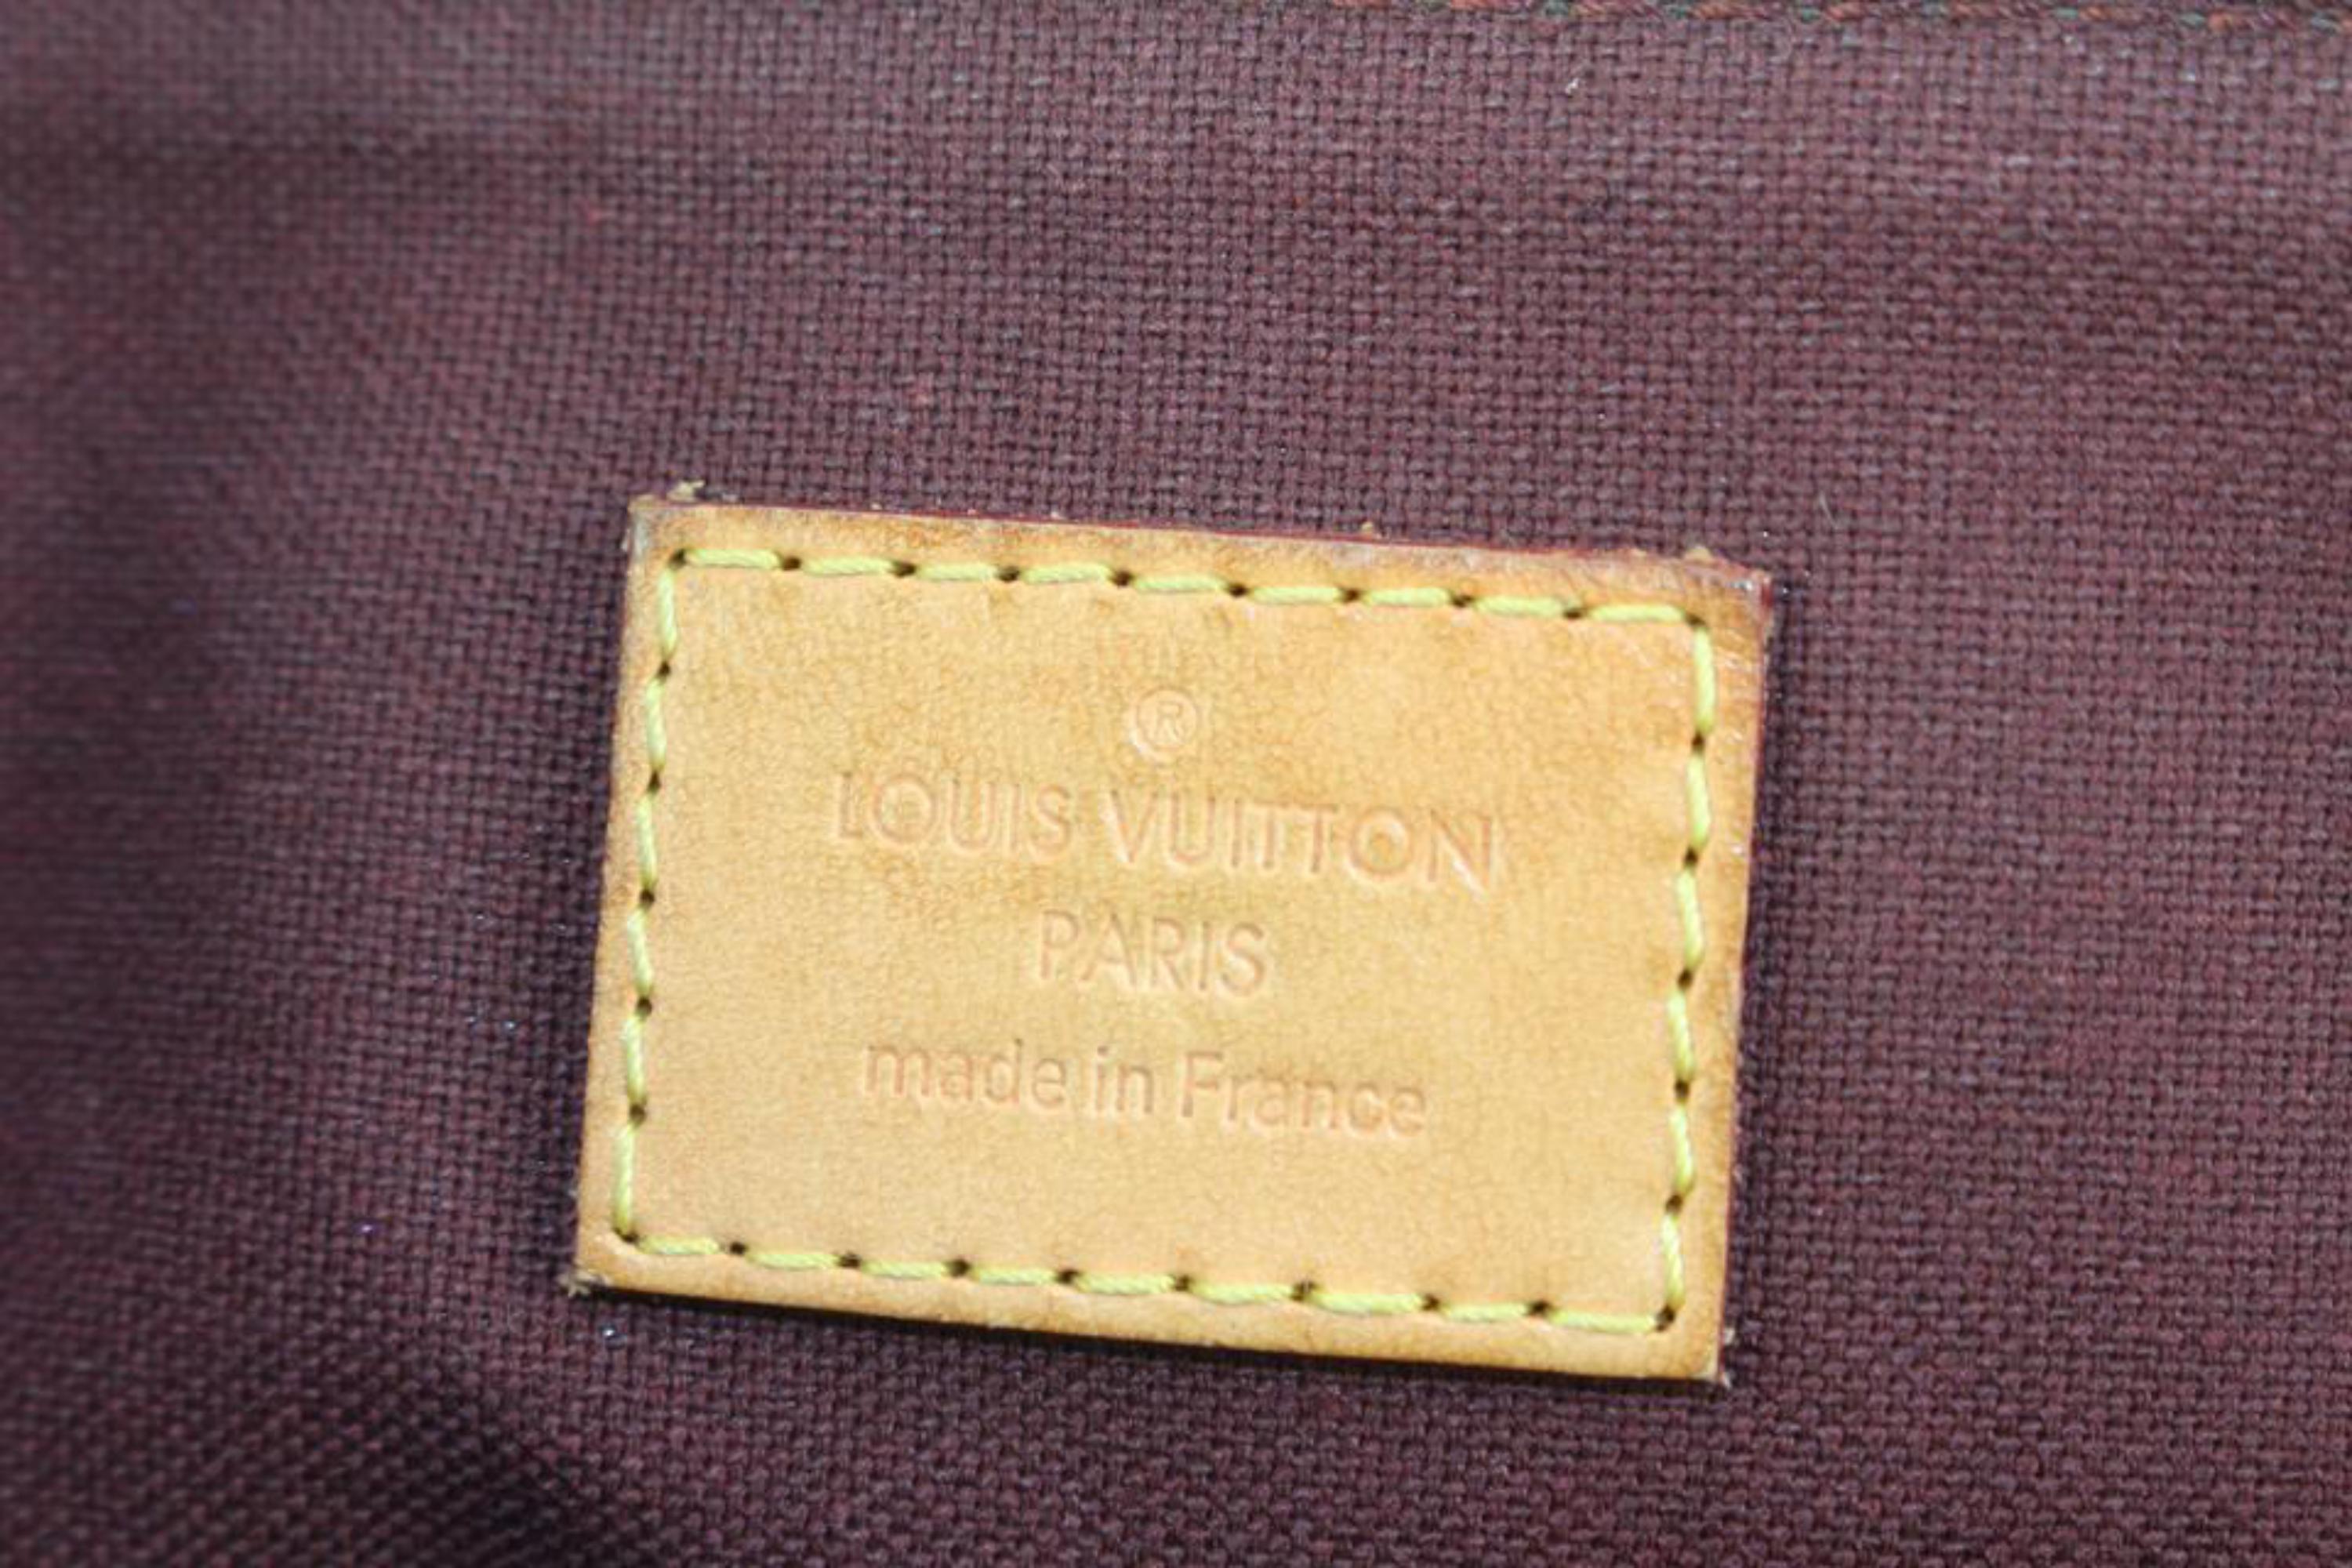 Louis Vuitton Discontinued Monogram Iena PM Zip Tote Bag 86lk67s